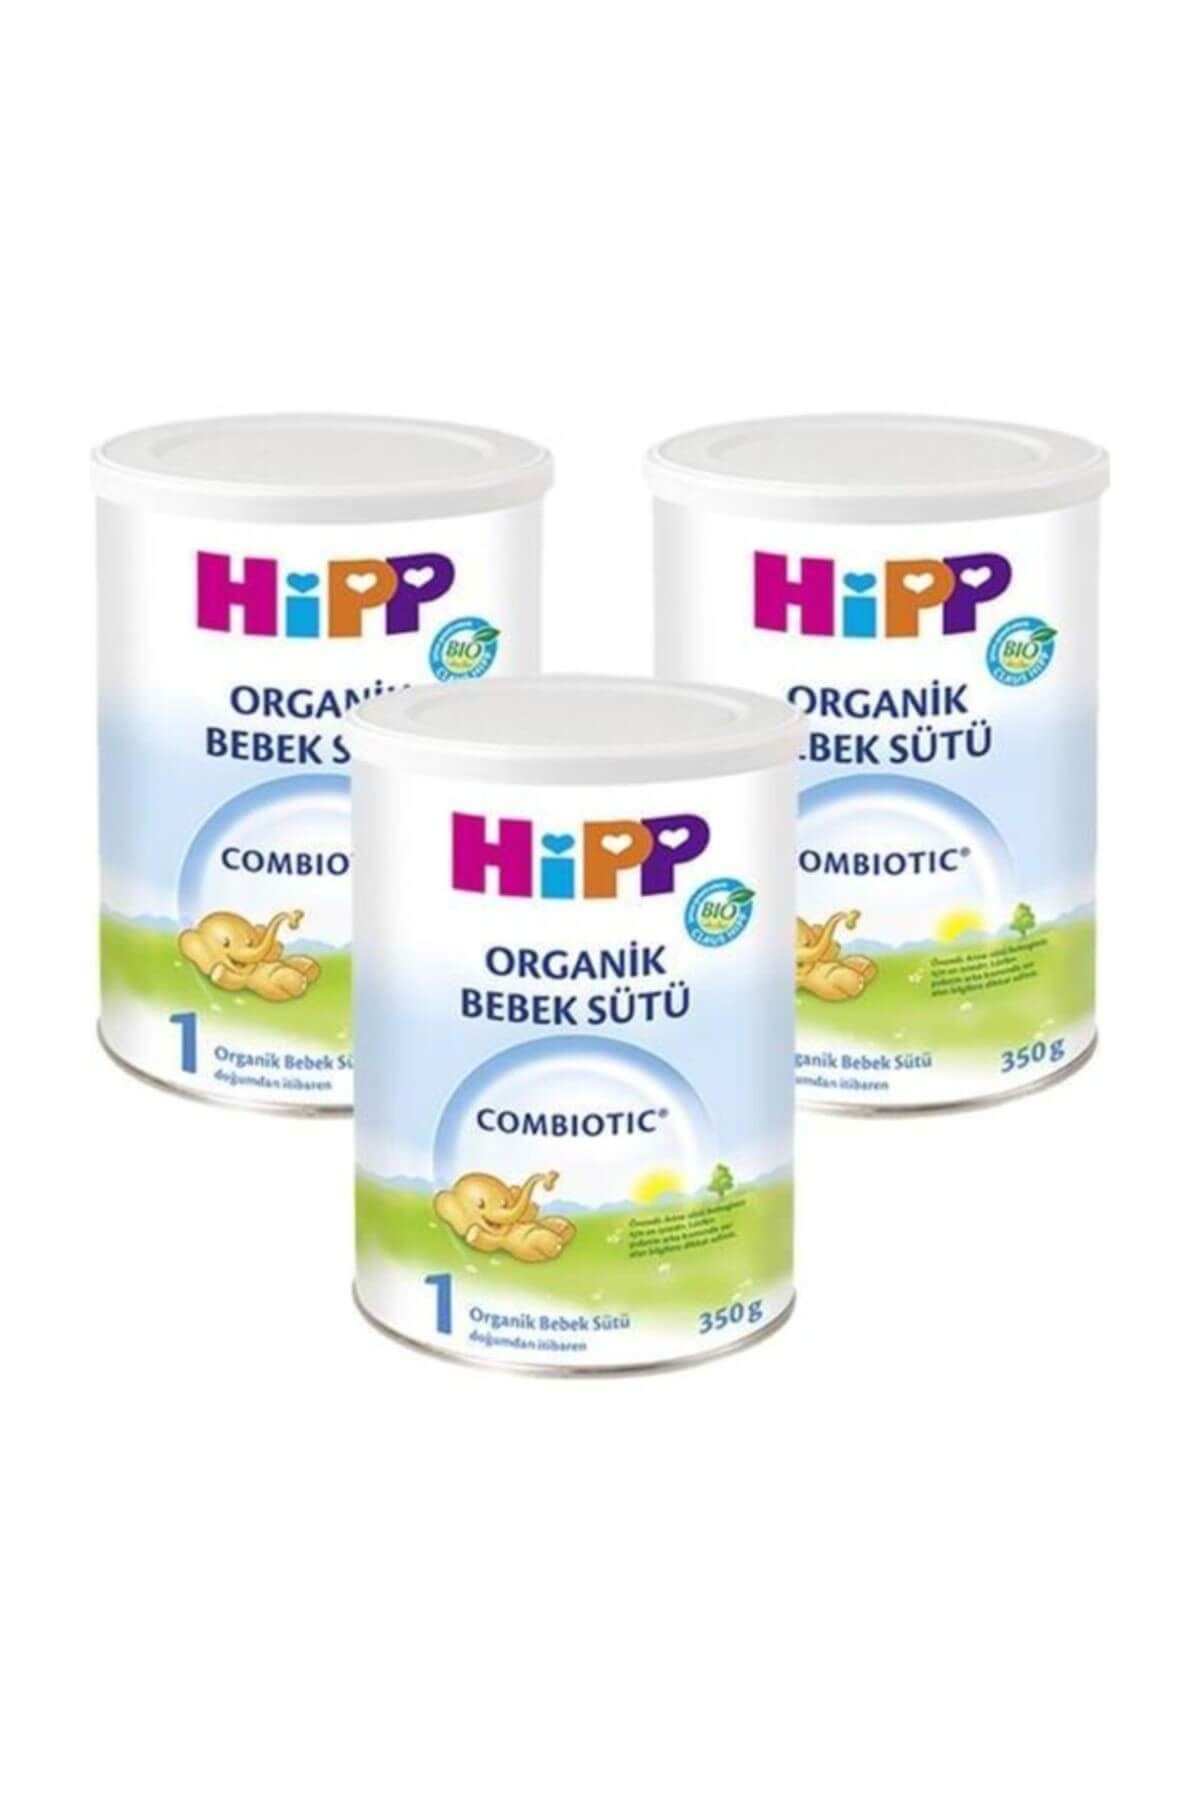 Hipp Organik Combiotic Bebek Sütü 1 Numara 350 gr x 3 Adet